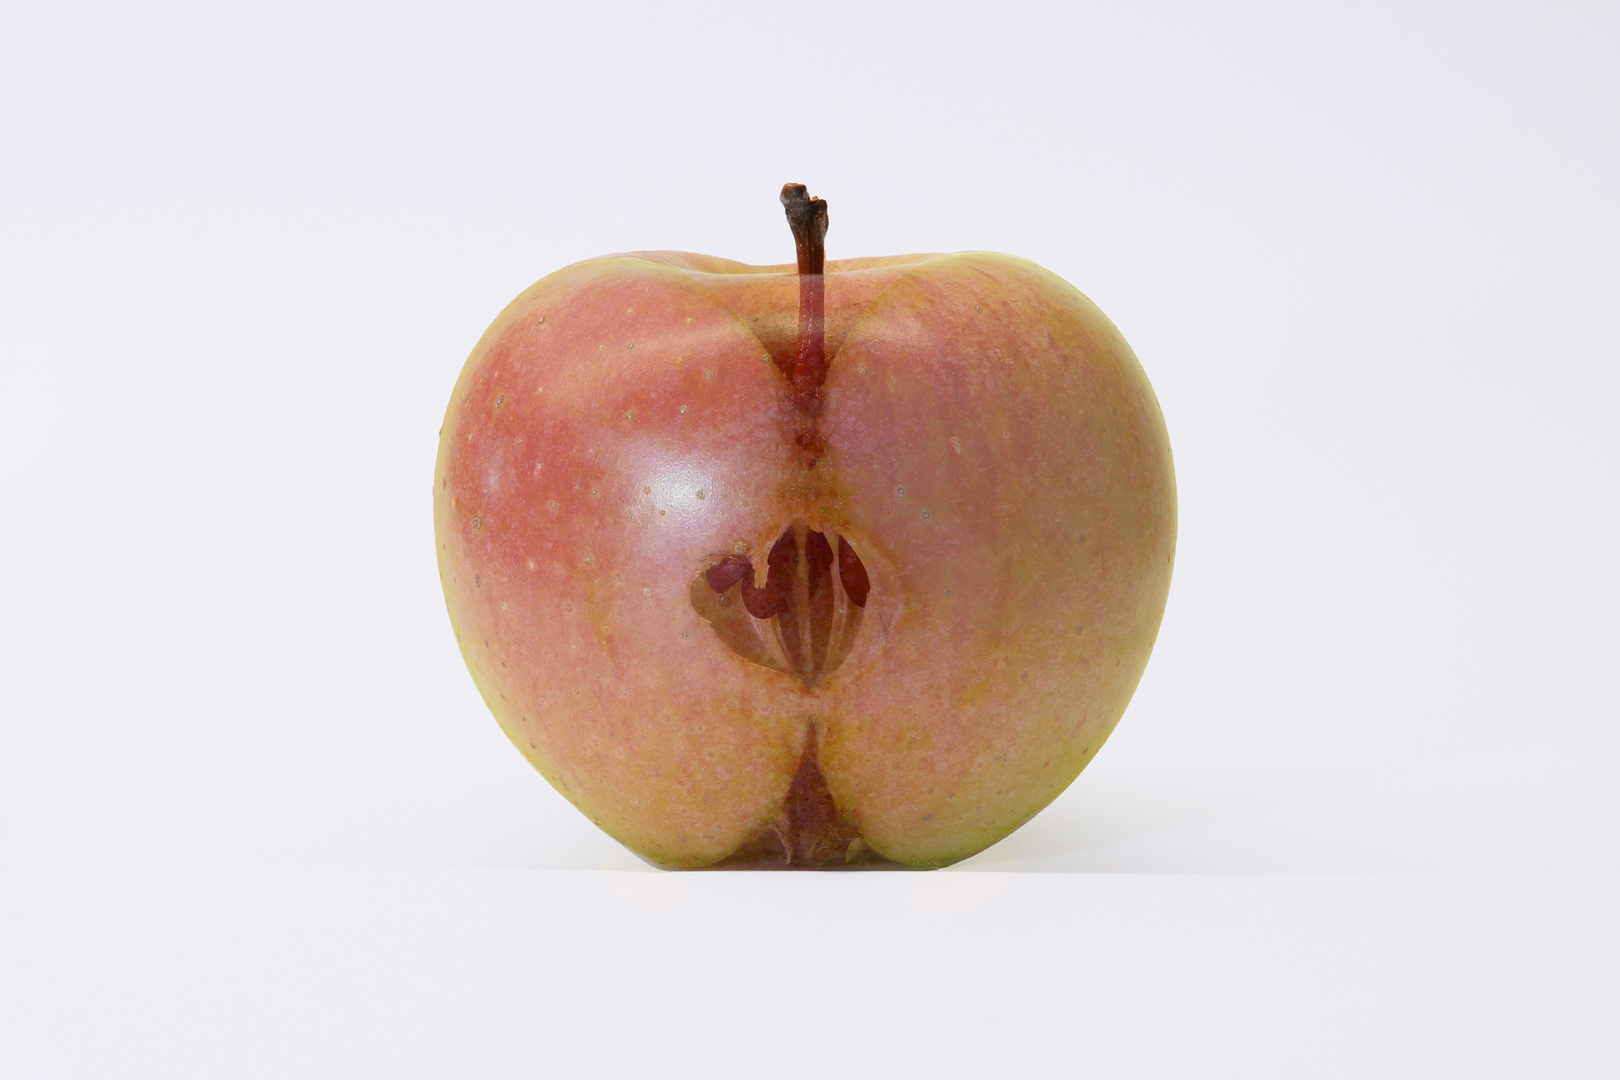 Die Anatomie des Apfels